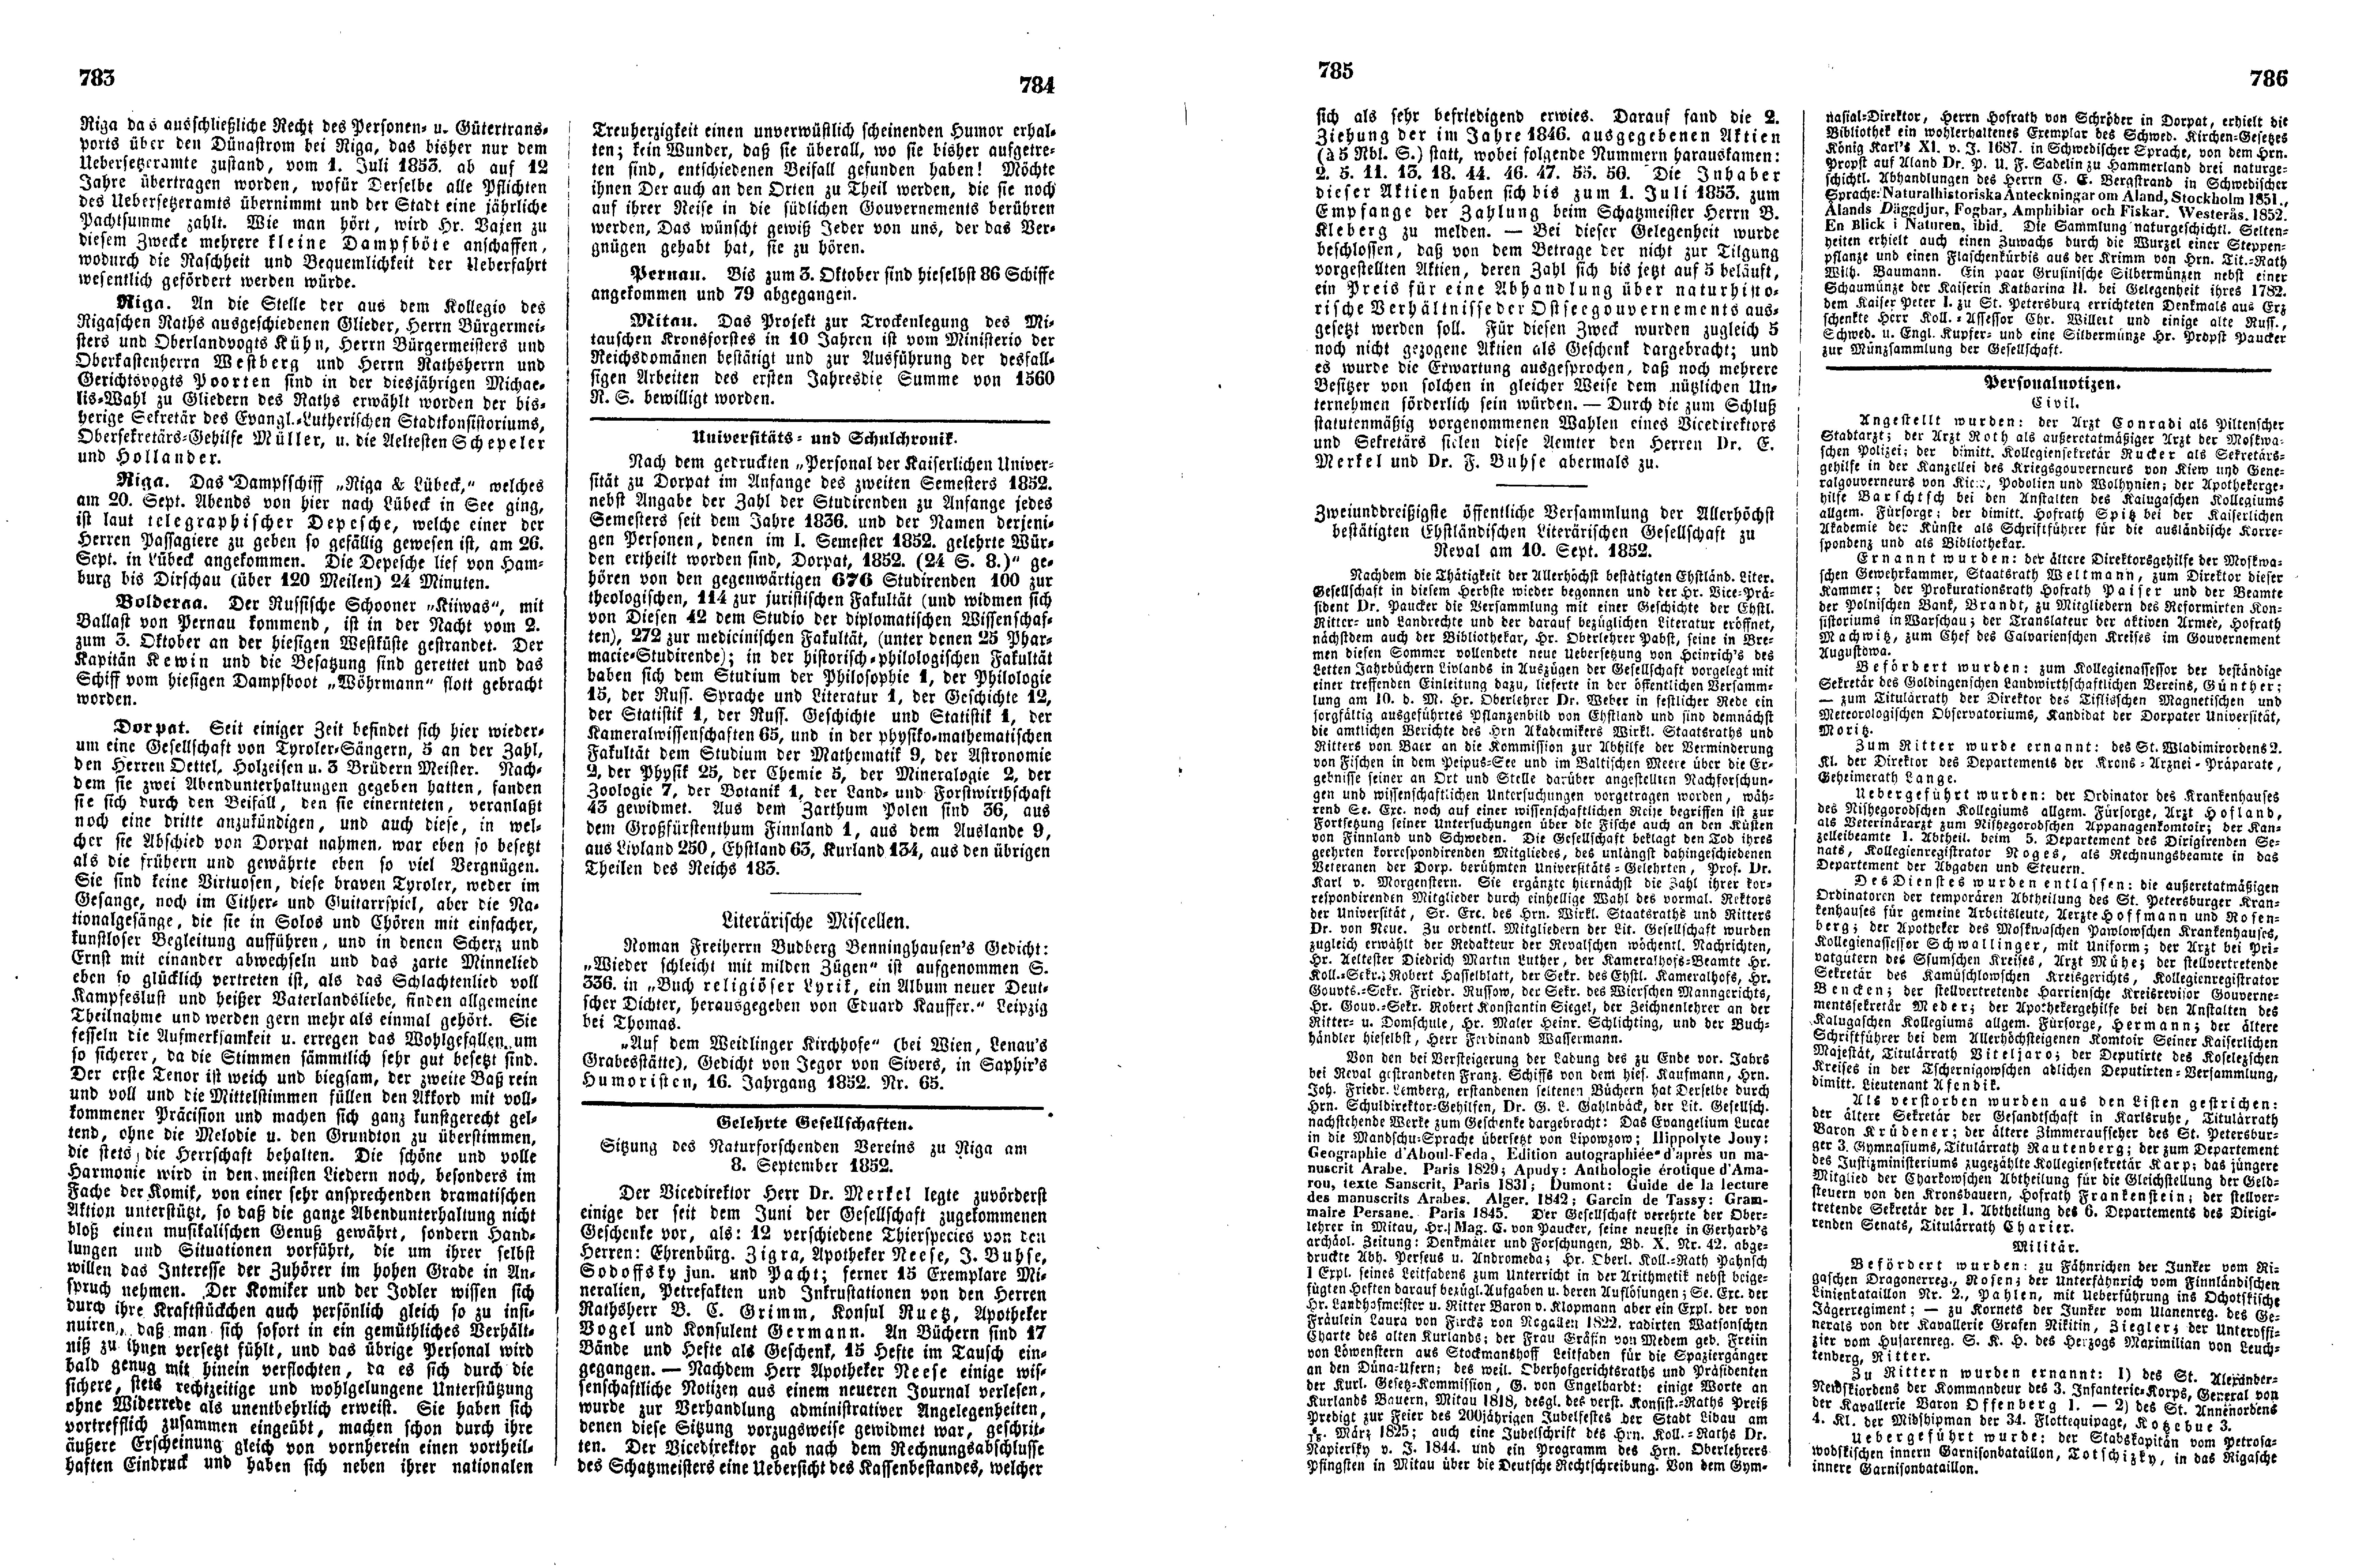 Das Inland [17] (1852) | 201. (783-786) Main body of text